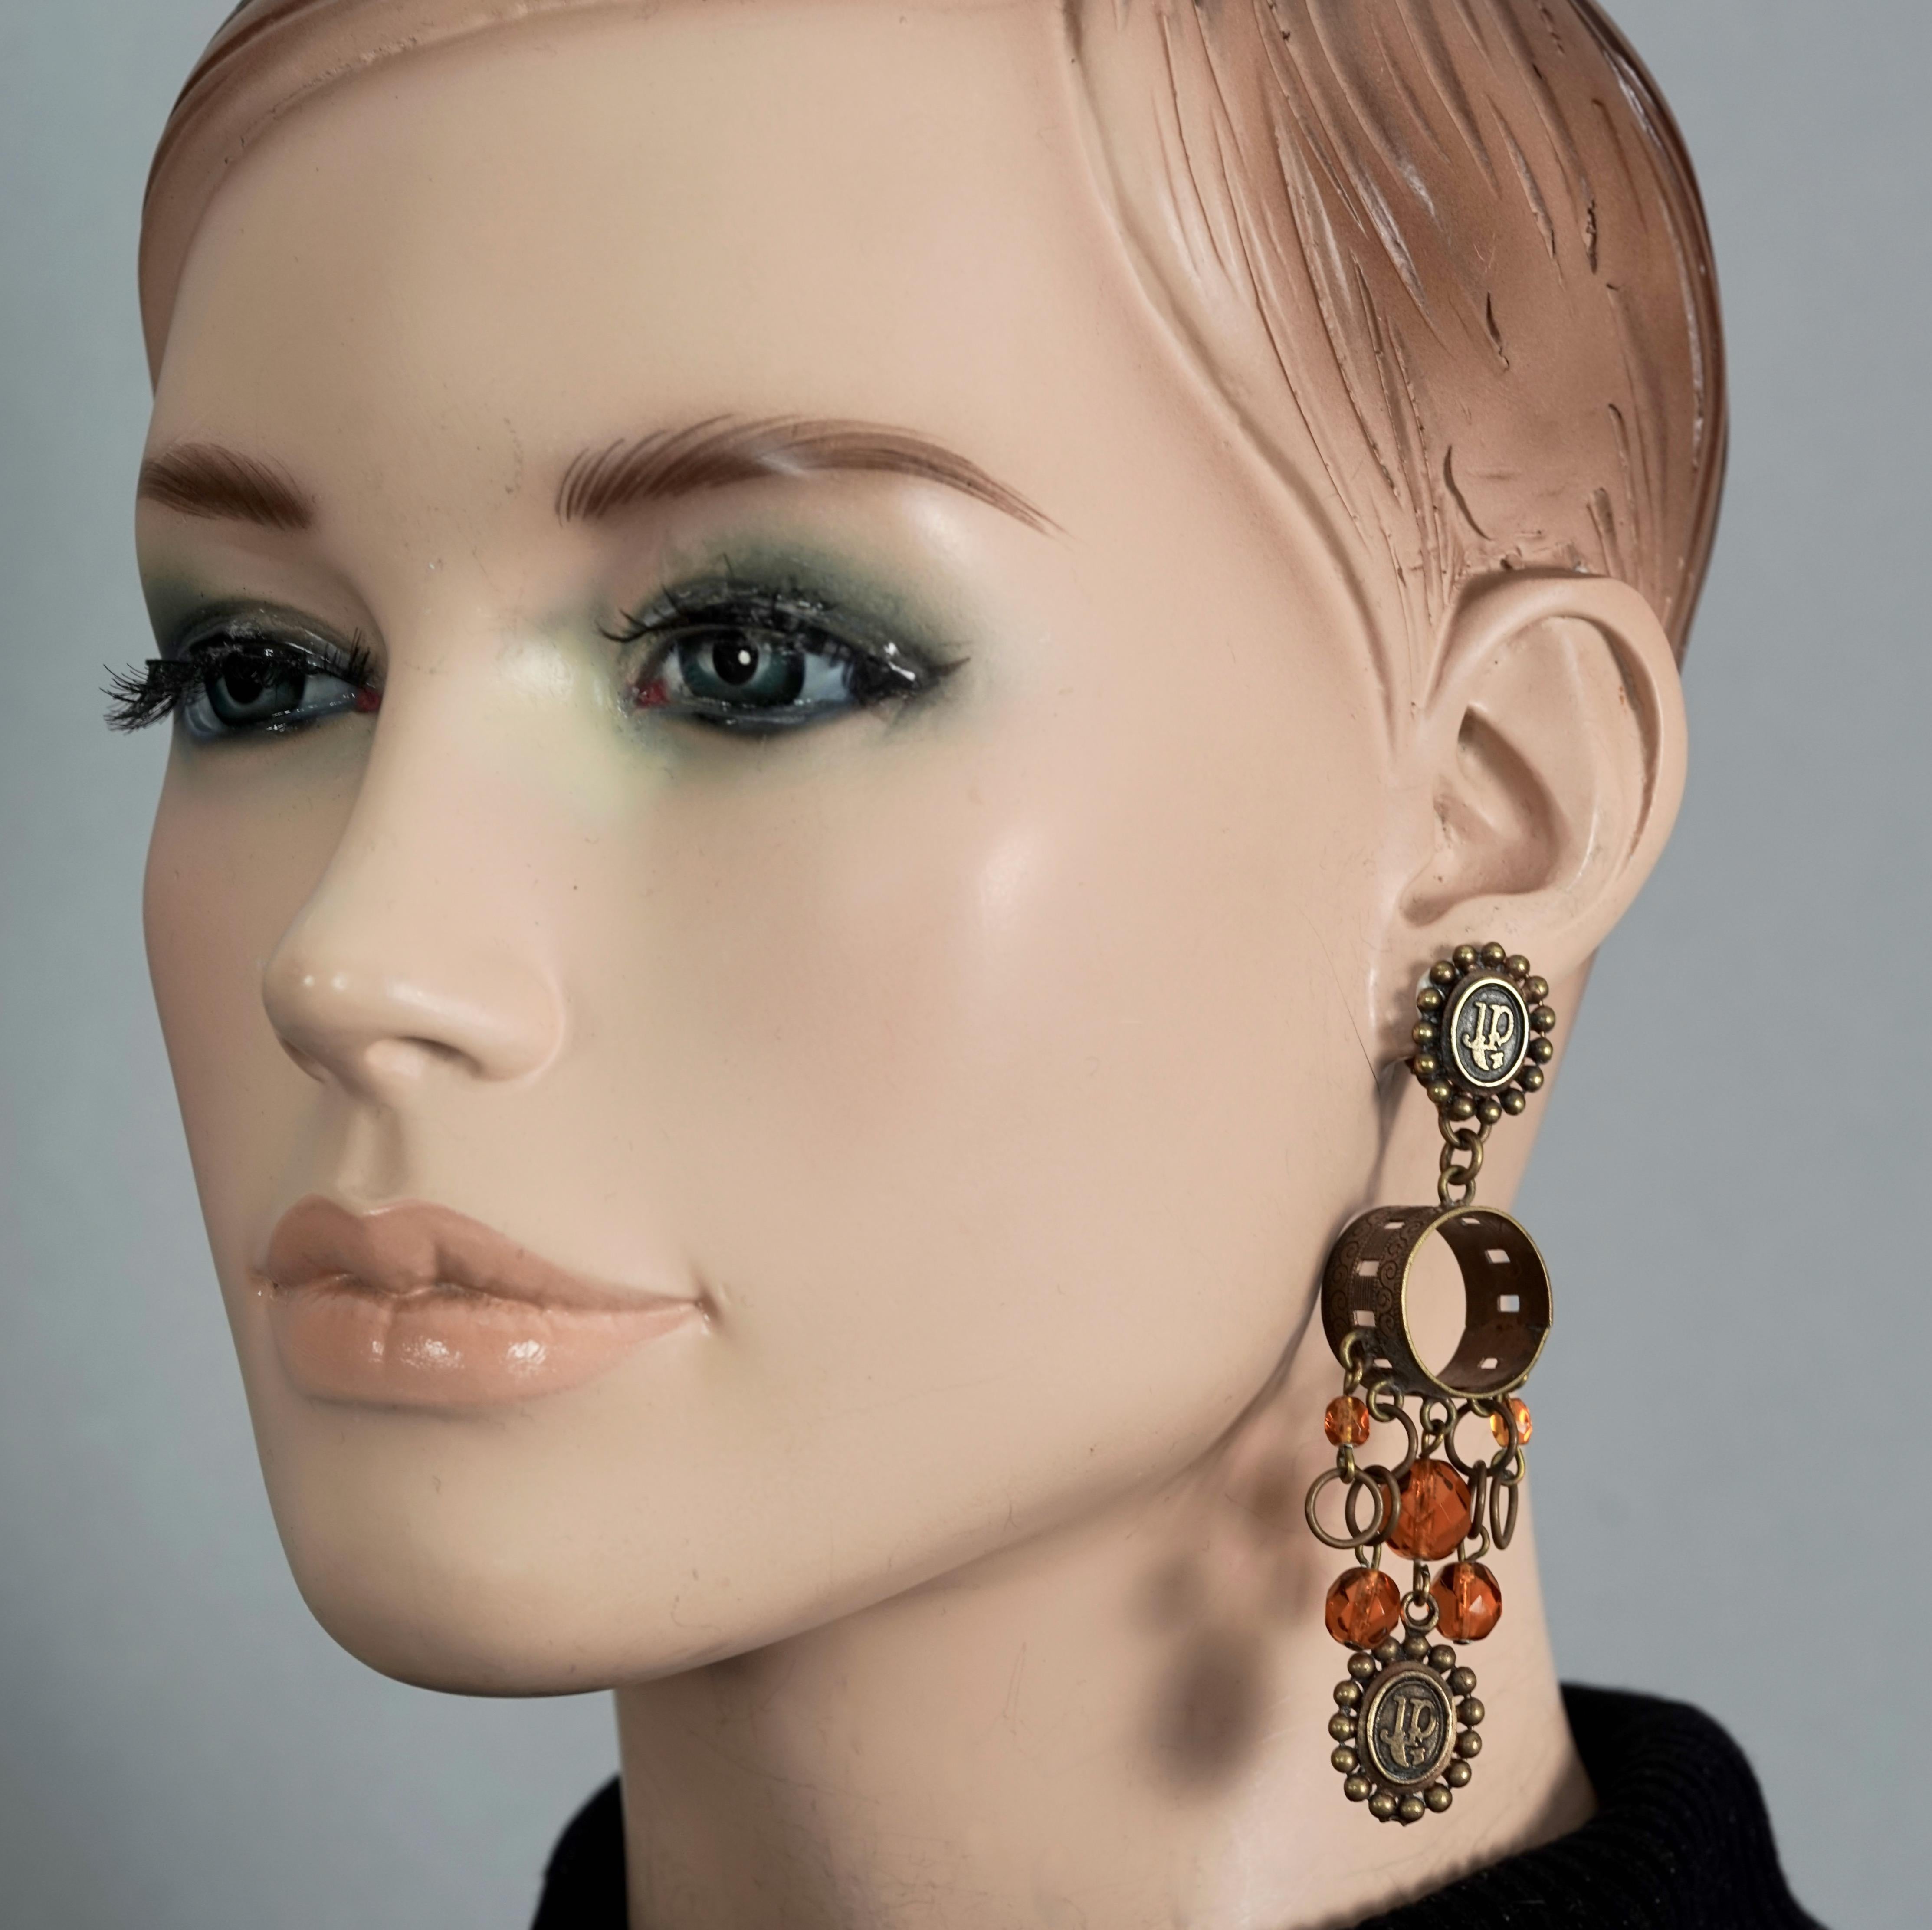 Vintage JEAN PAUL GAULTIER Logo Amber Beads Hoop Dangling Earrings

Measurements:
Height: 3.74 inches (9.5 cm)
Width: 0.38 inch (0.98 cm)

Features:
- 100% Authentic JEAN PAUL GAULTIER.
- Dangling earrings with embossed JPG logo medallions, hoop and